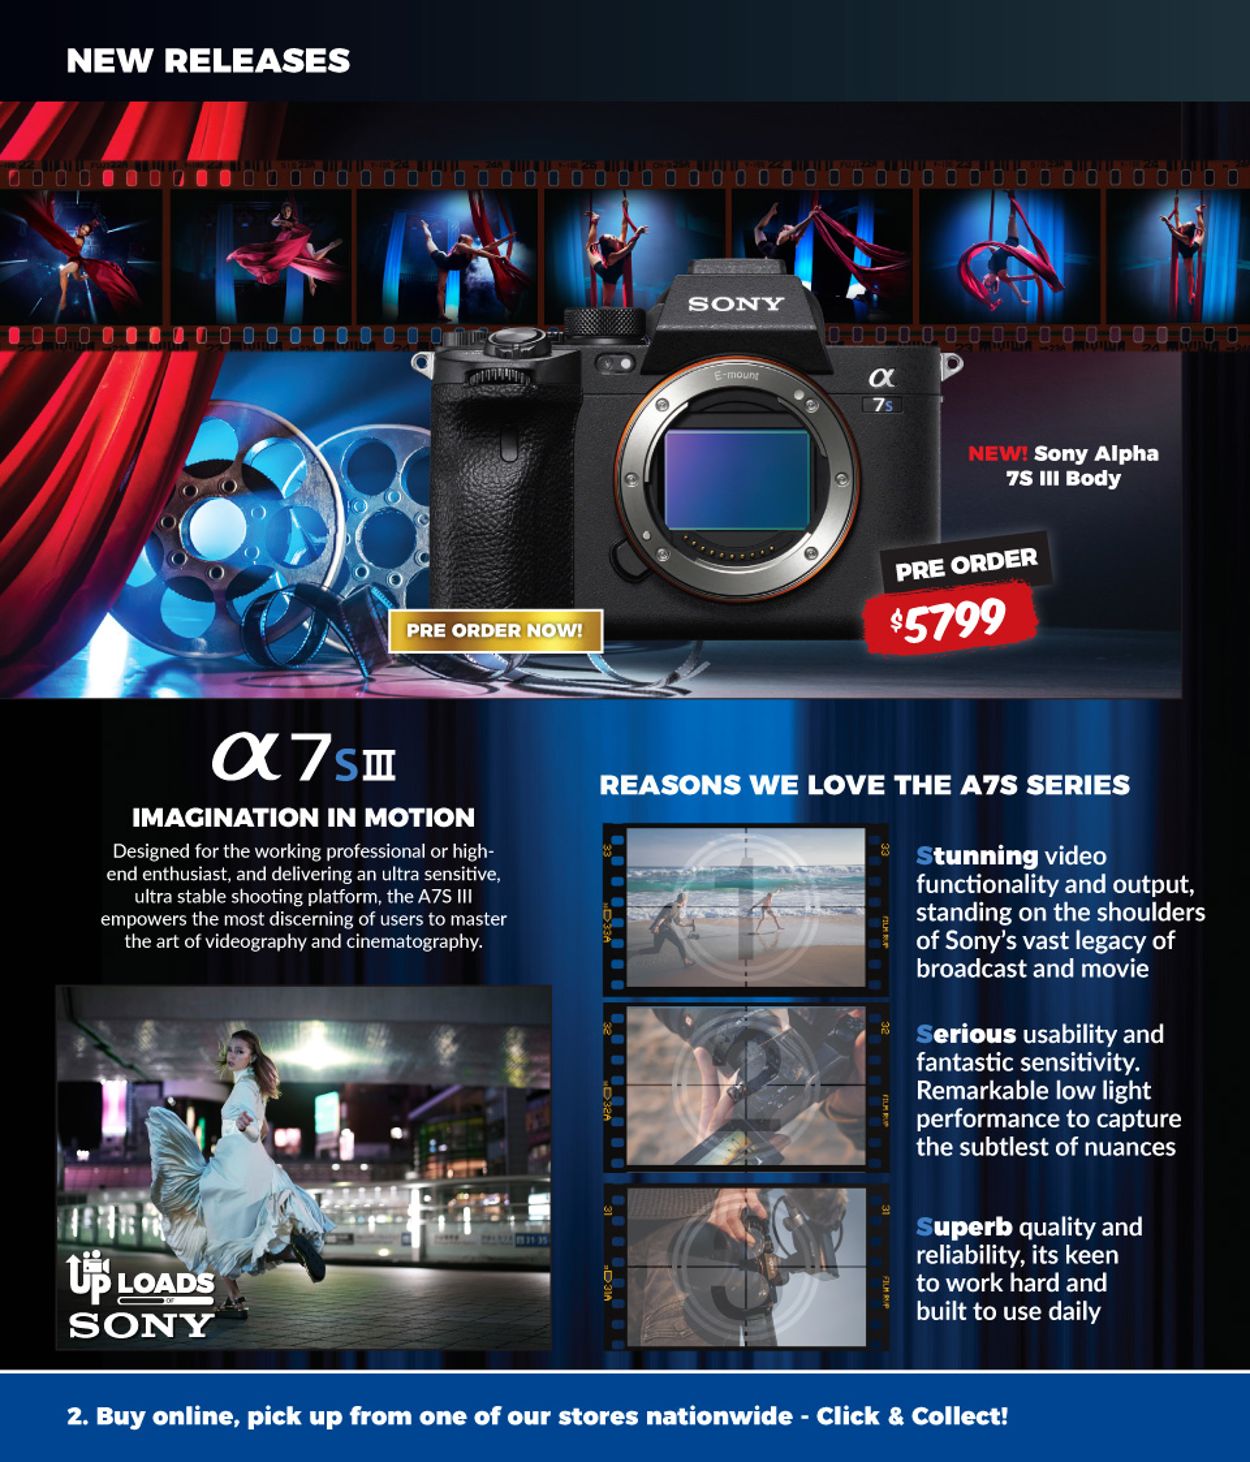 Camera House Catalogue from 21/09/2020